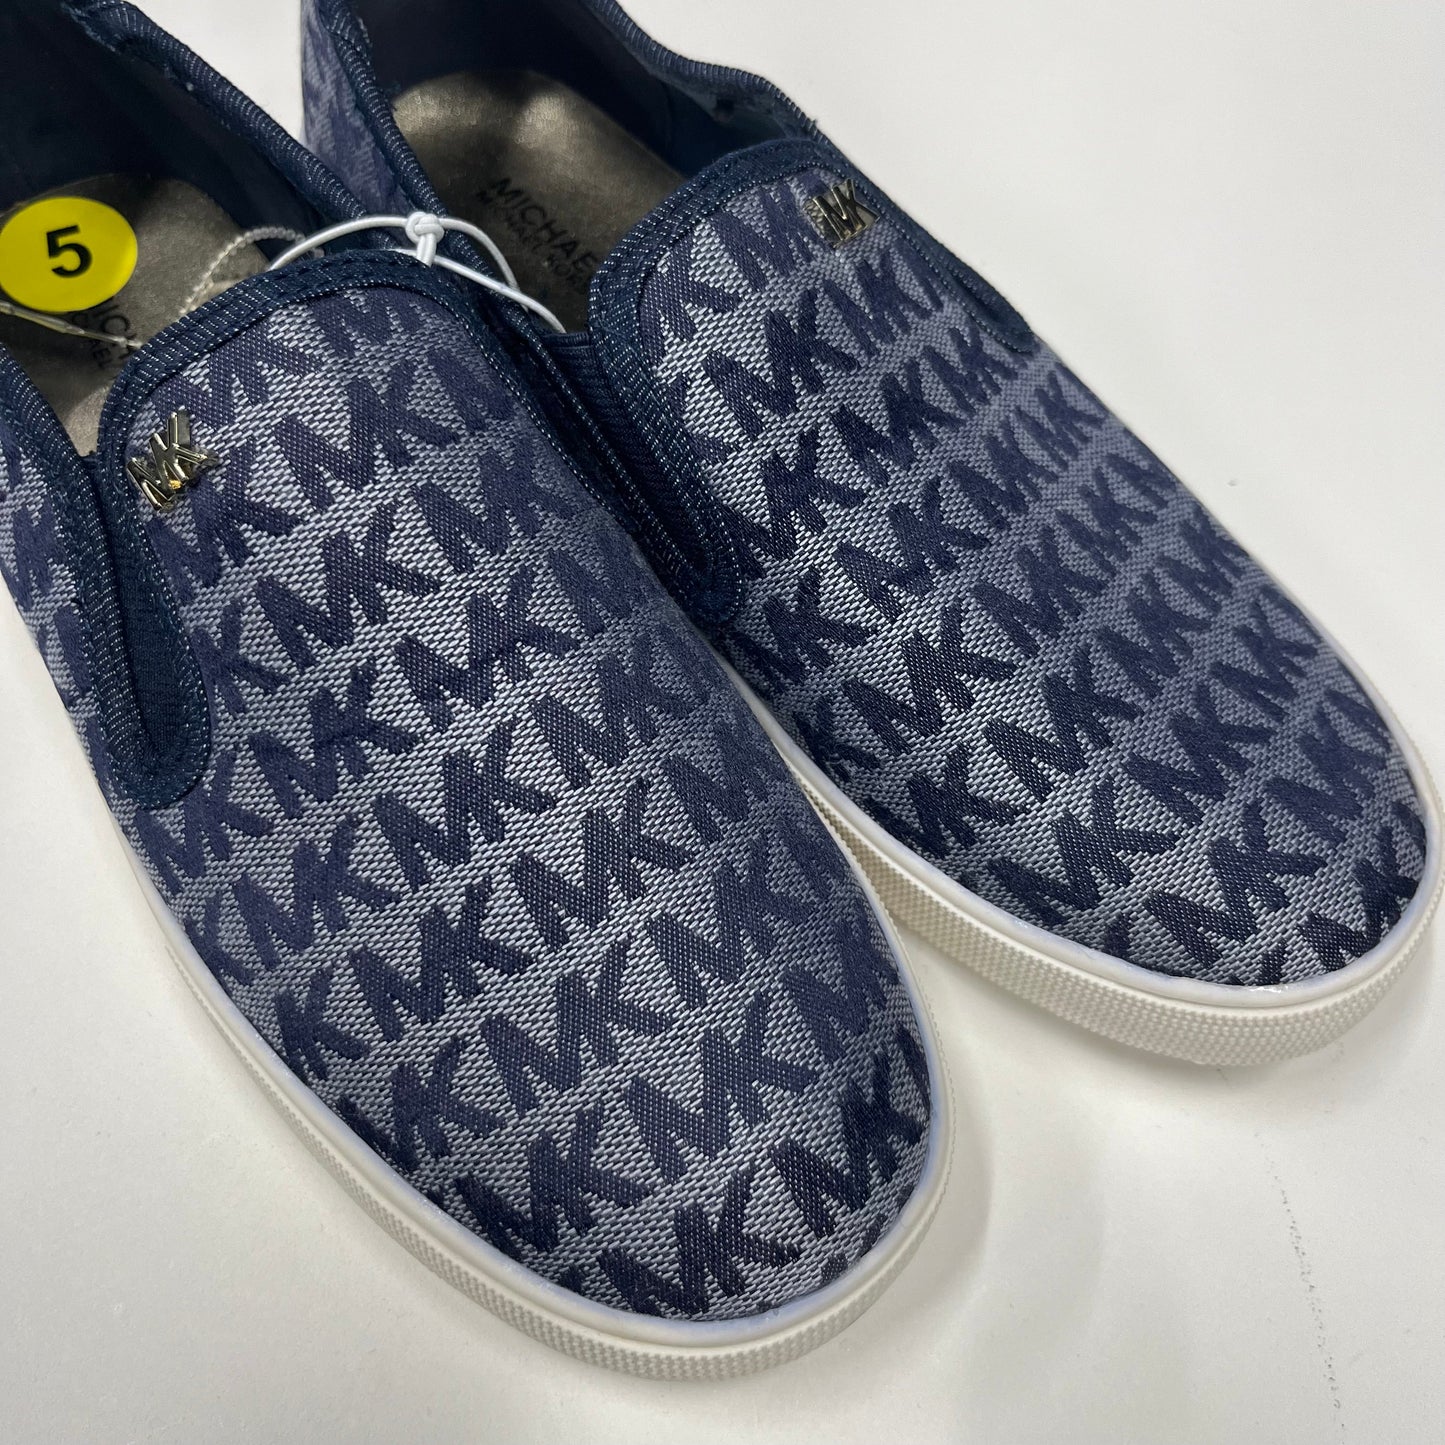 Shoes Flats Mule & Slide By Michael Kors  Size: 5